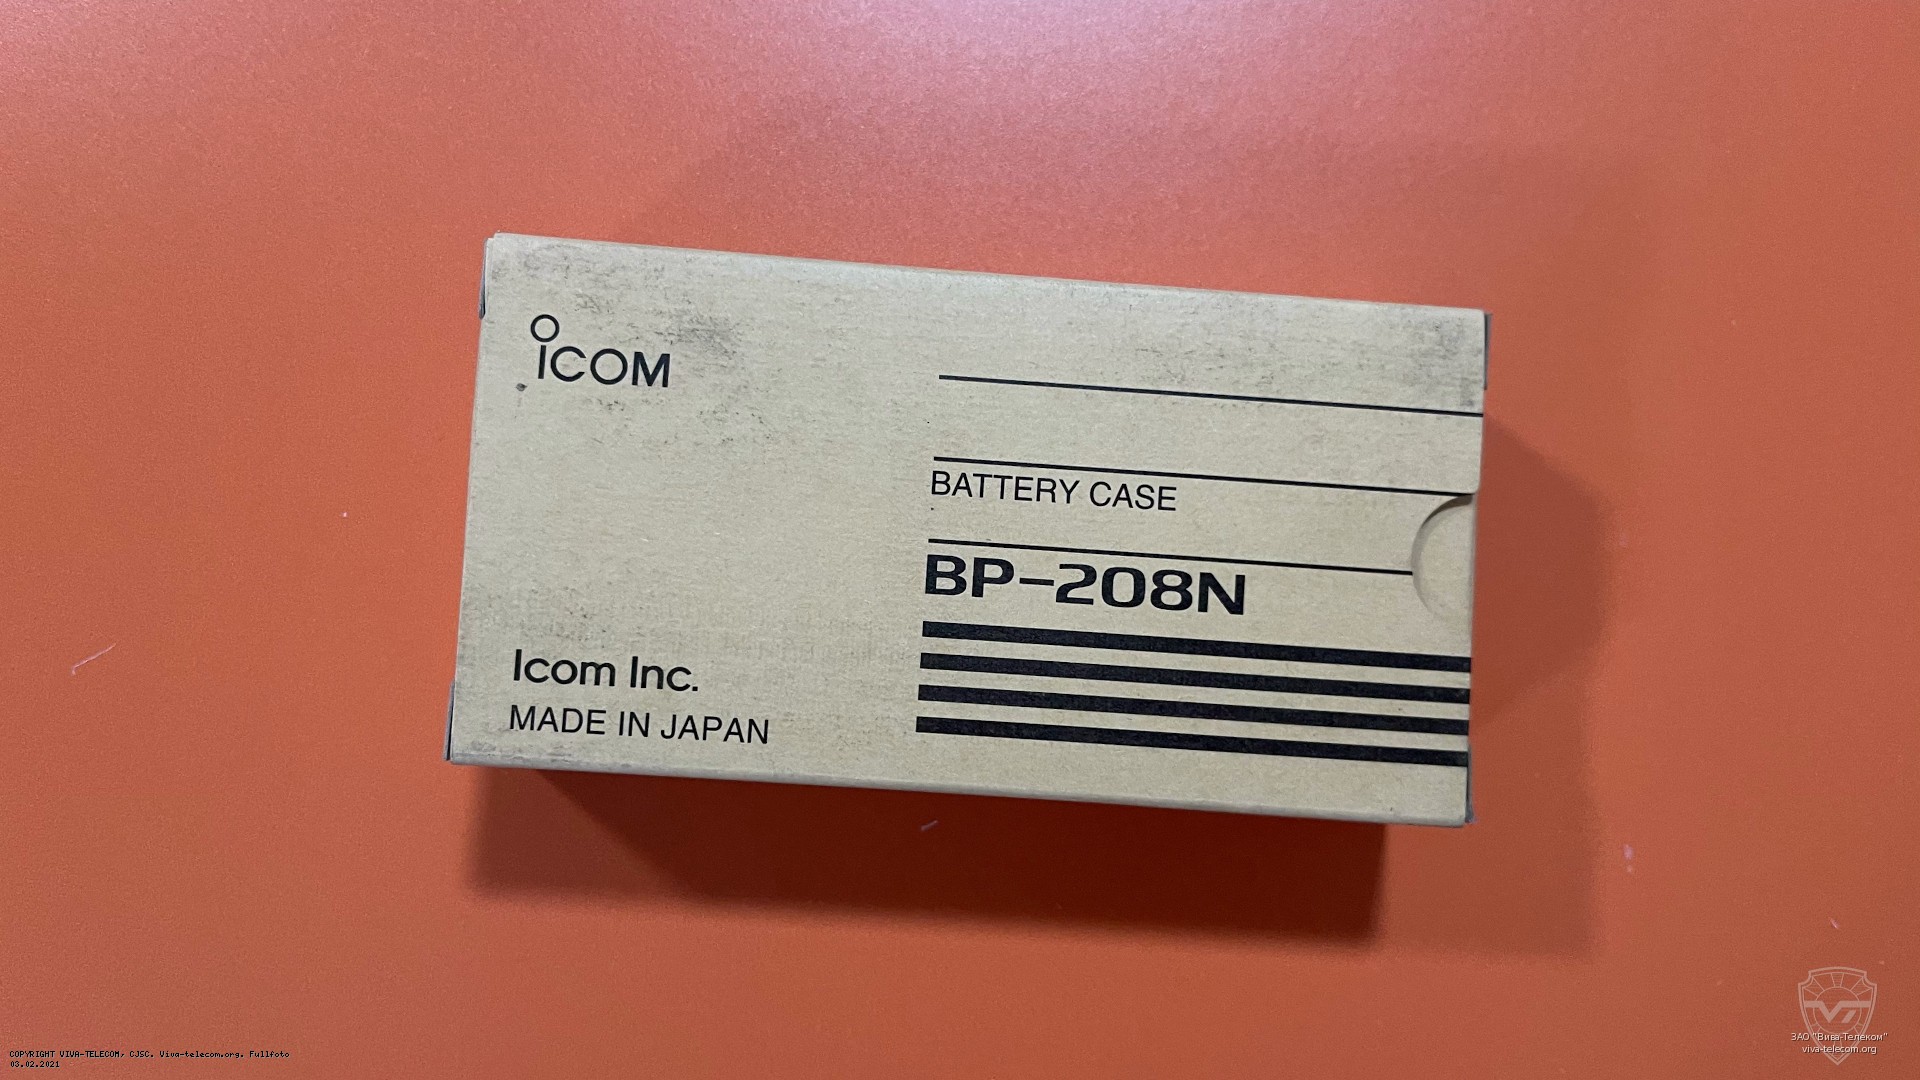   Icom BP-208